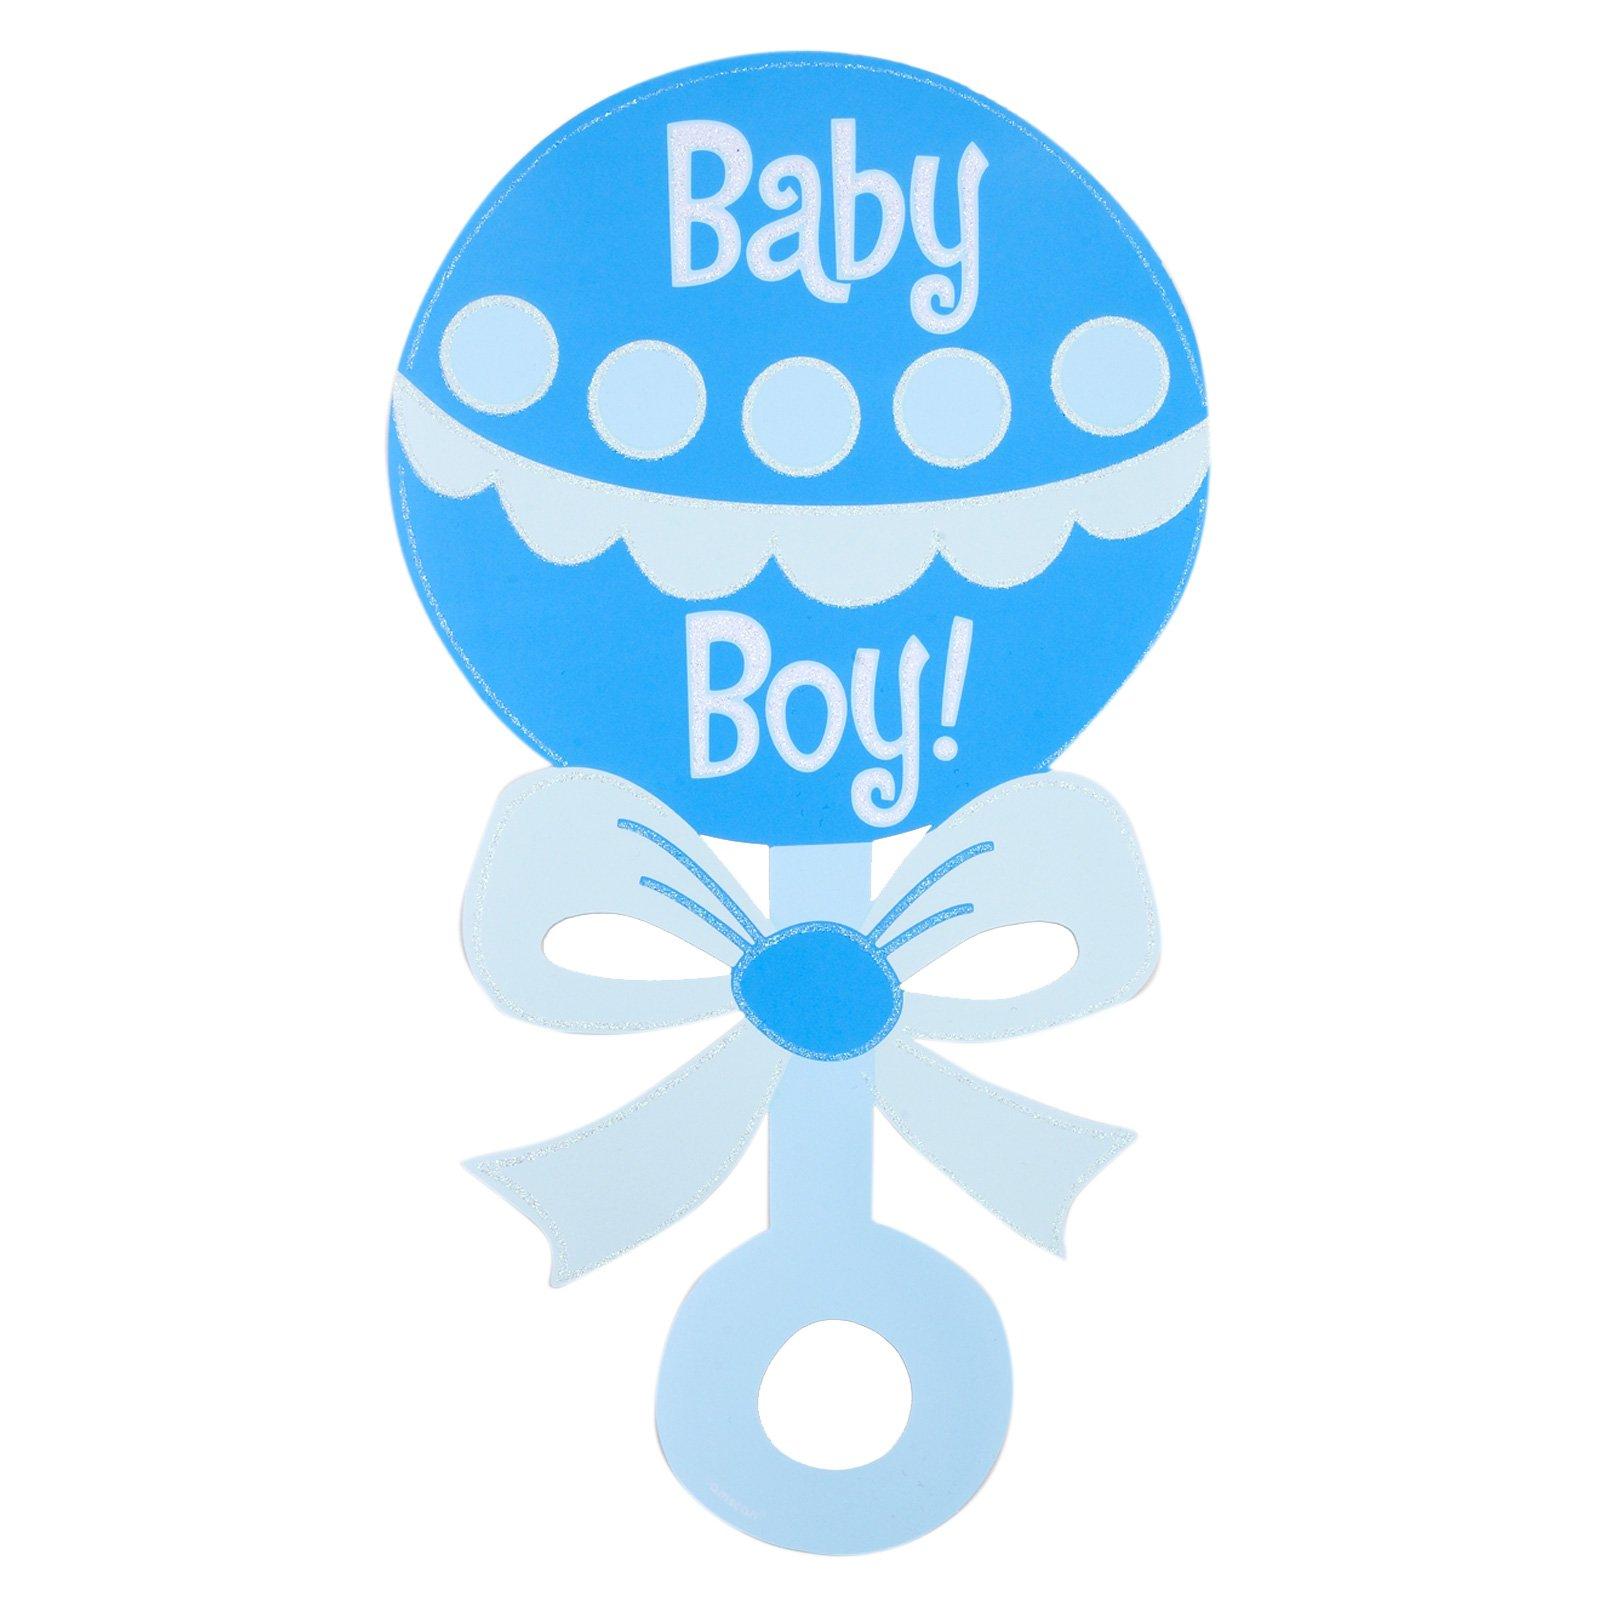 Baby boy clip art free